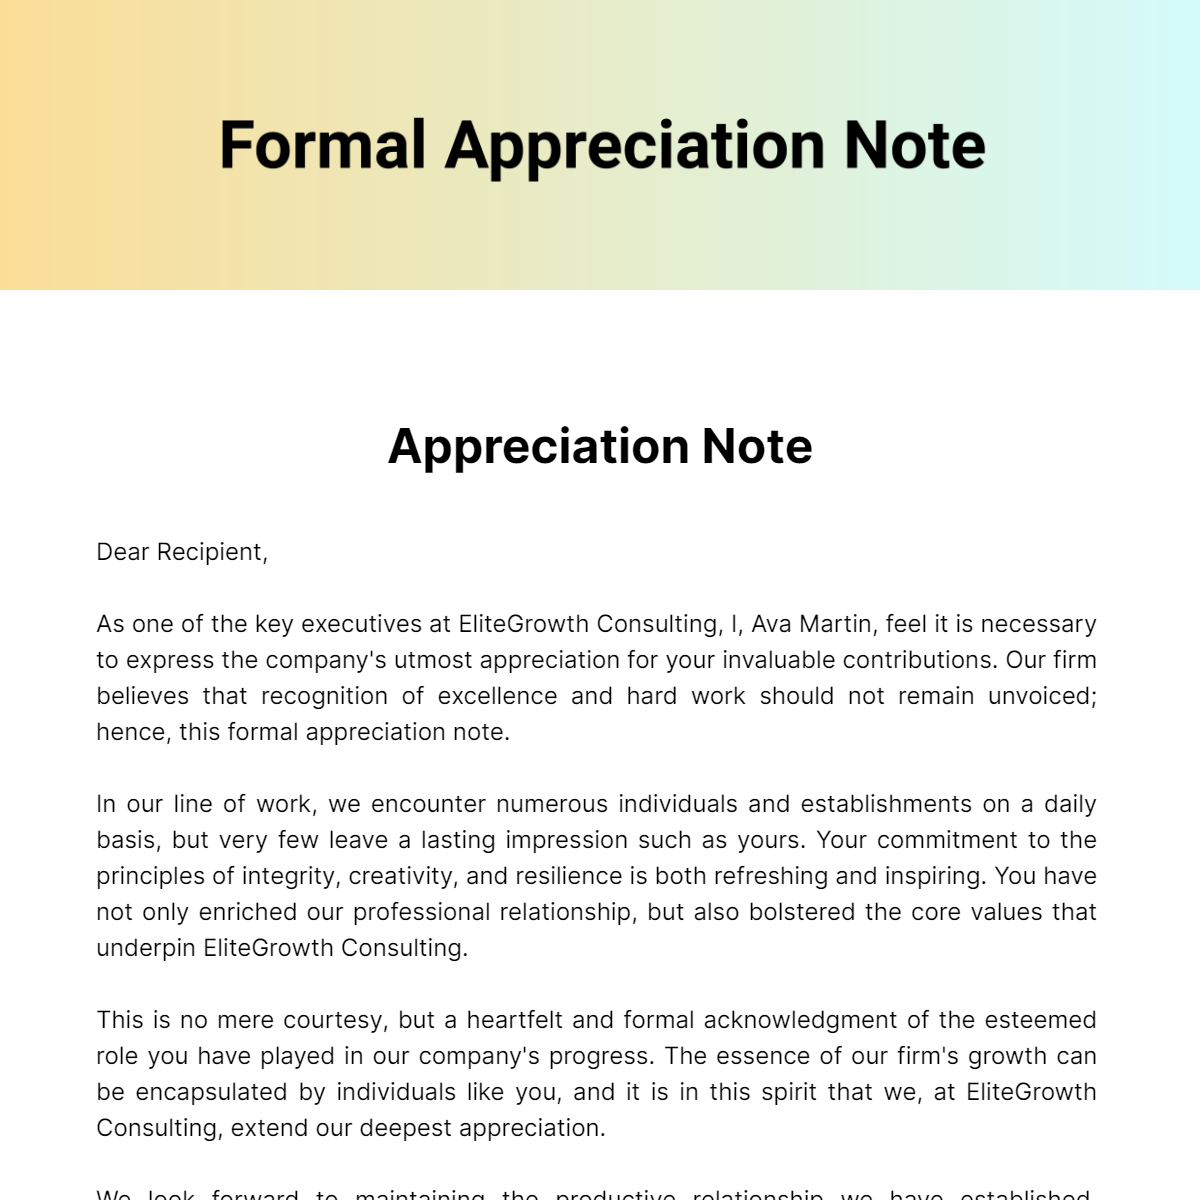 Formal Appreciation Note Template